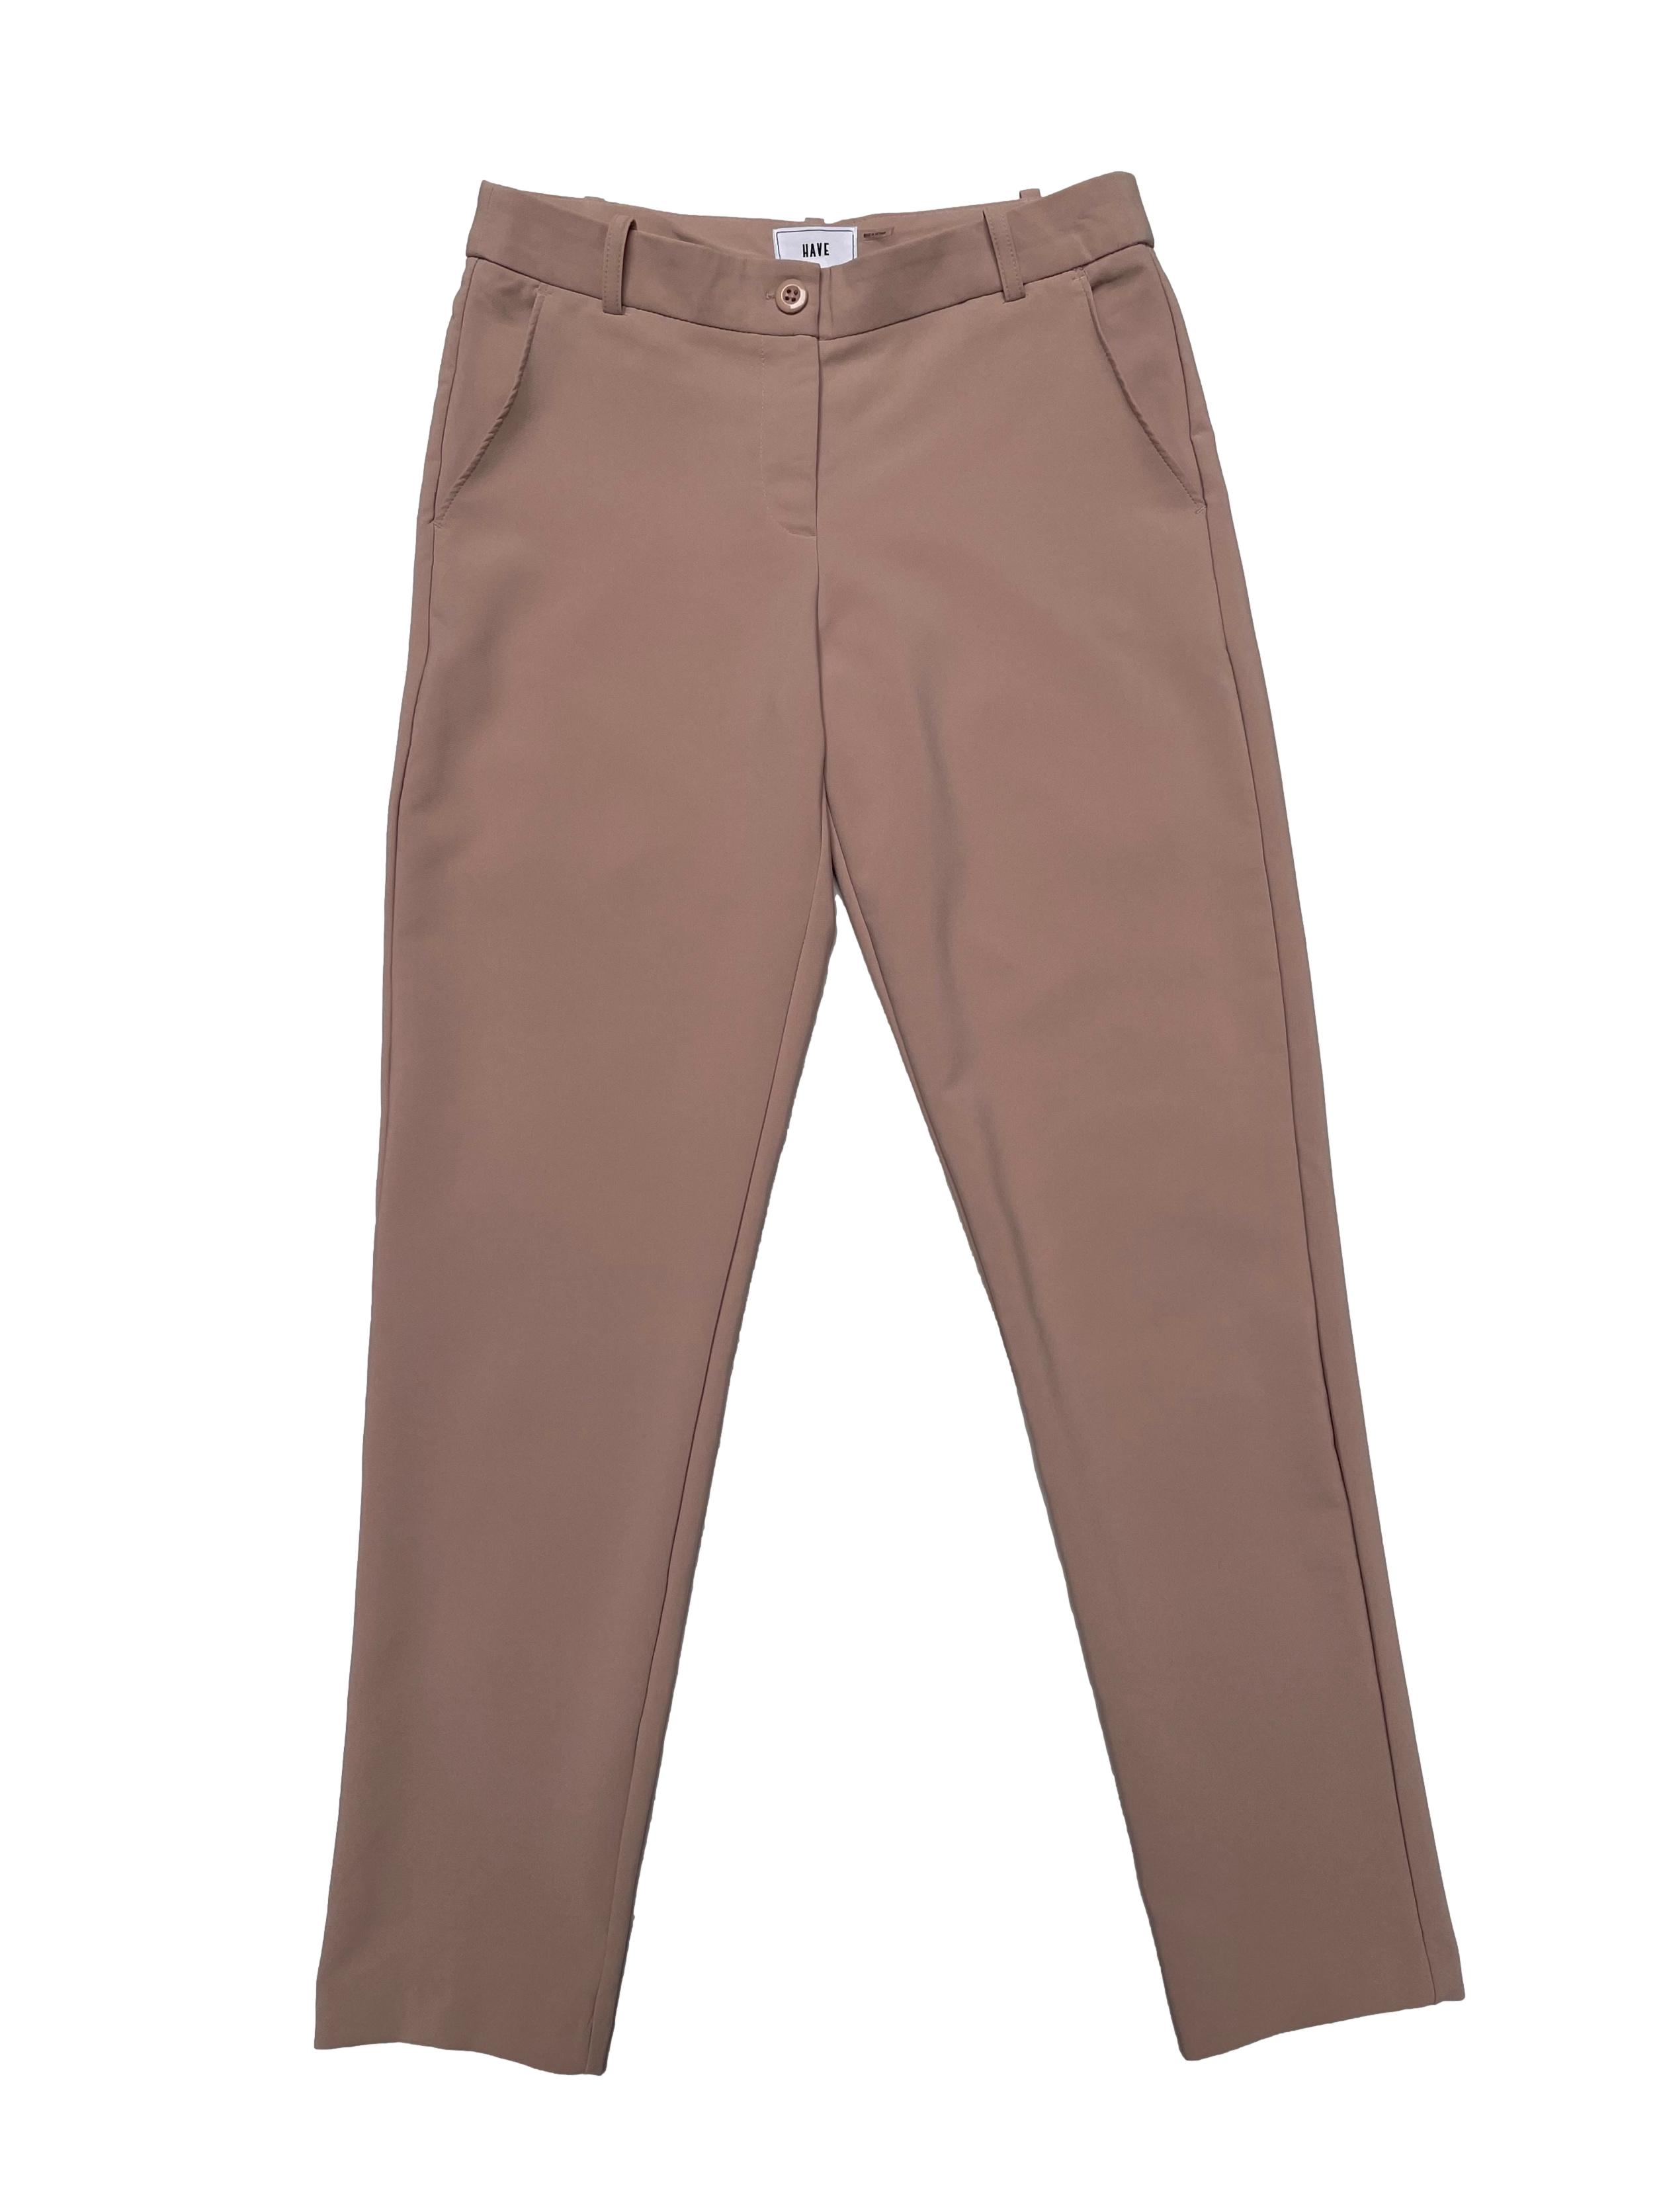 Pantalón palo rosa estilo formal, corte slim con bolsillos laterales, tiro medio. Cintura 72cm Largo 94cm